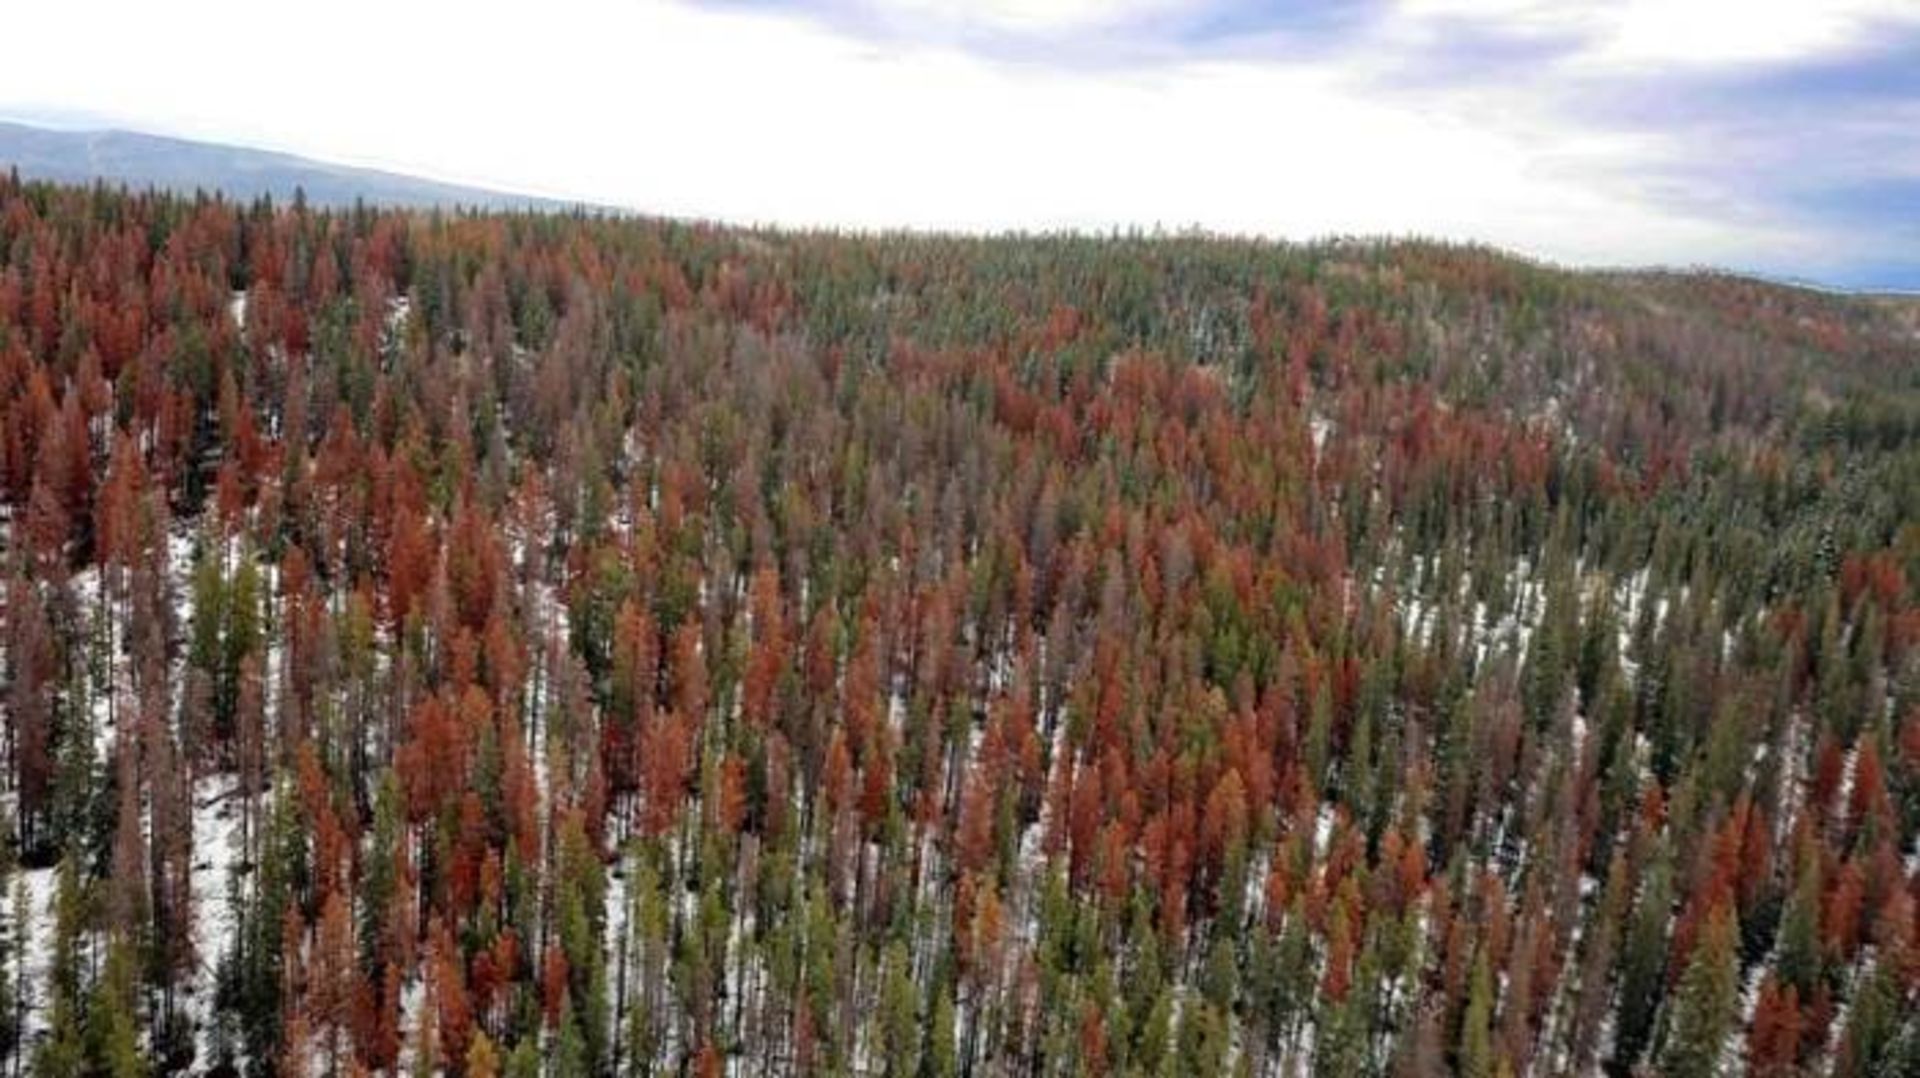 ویرانی جنگل توسط سوسک در کانادا / beetles devastated forested areas